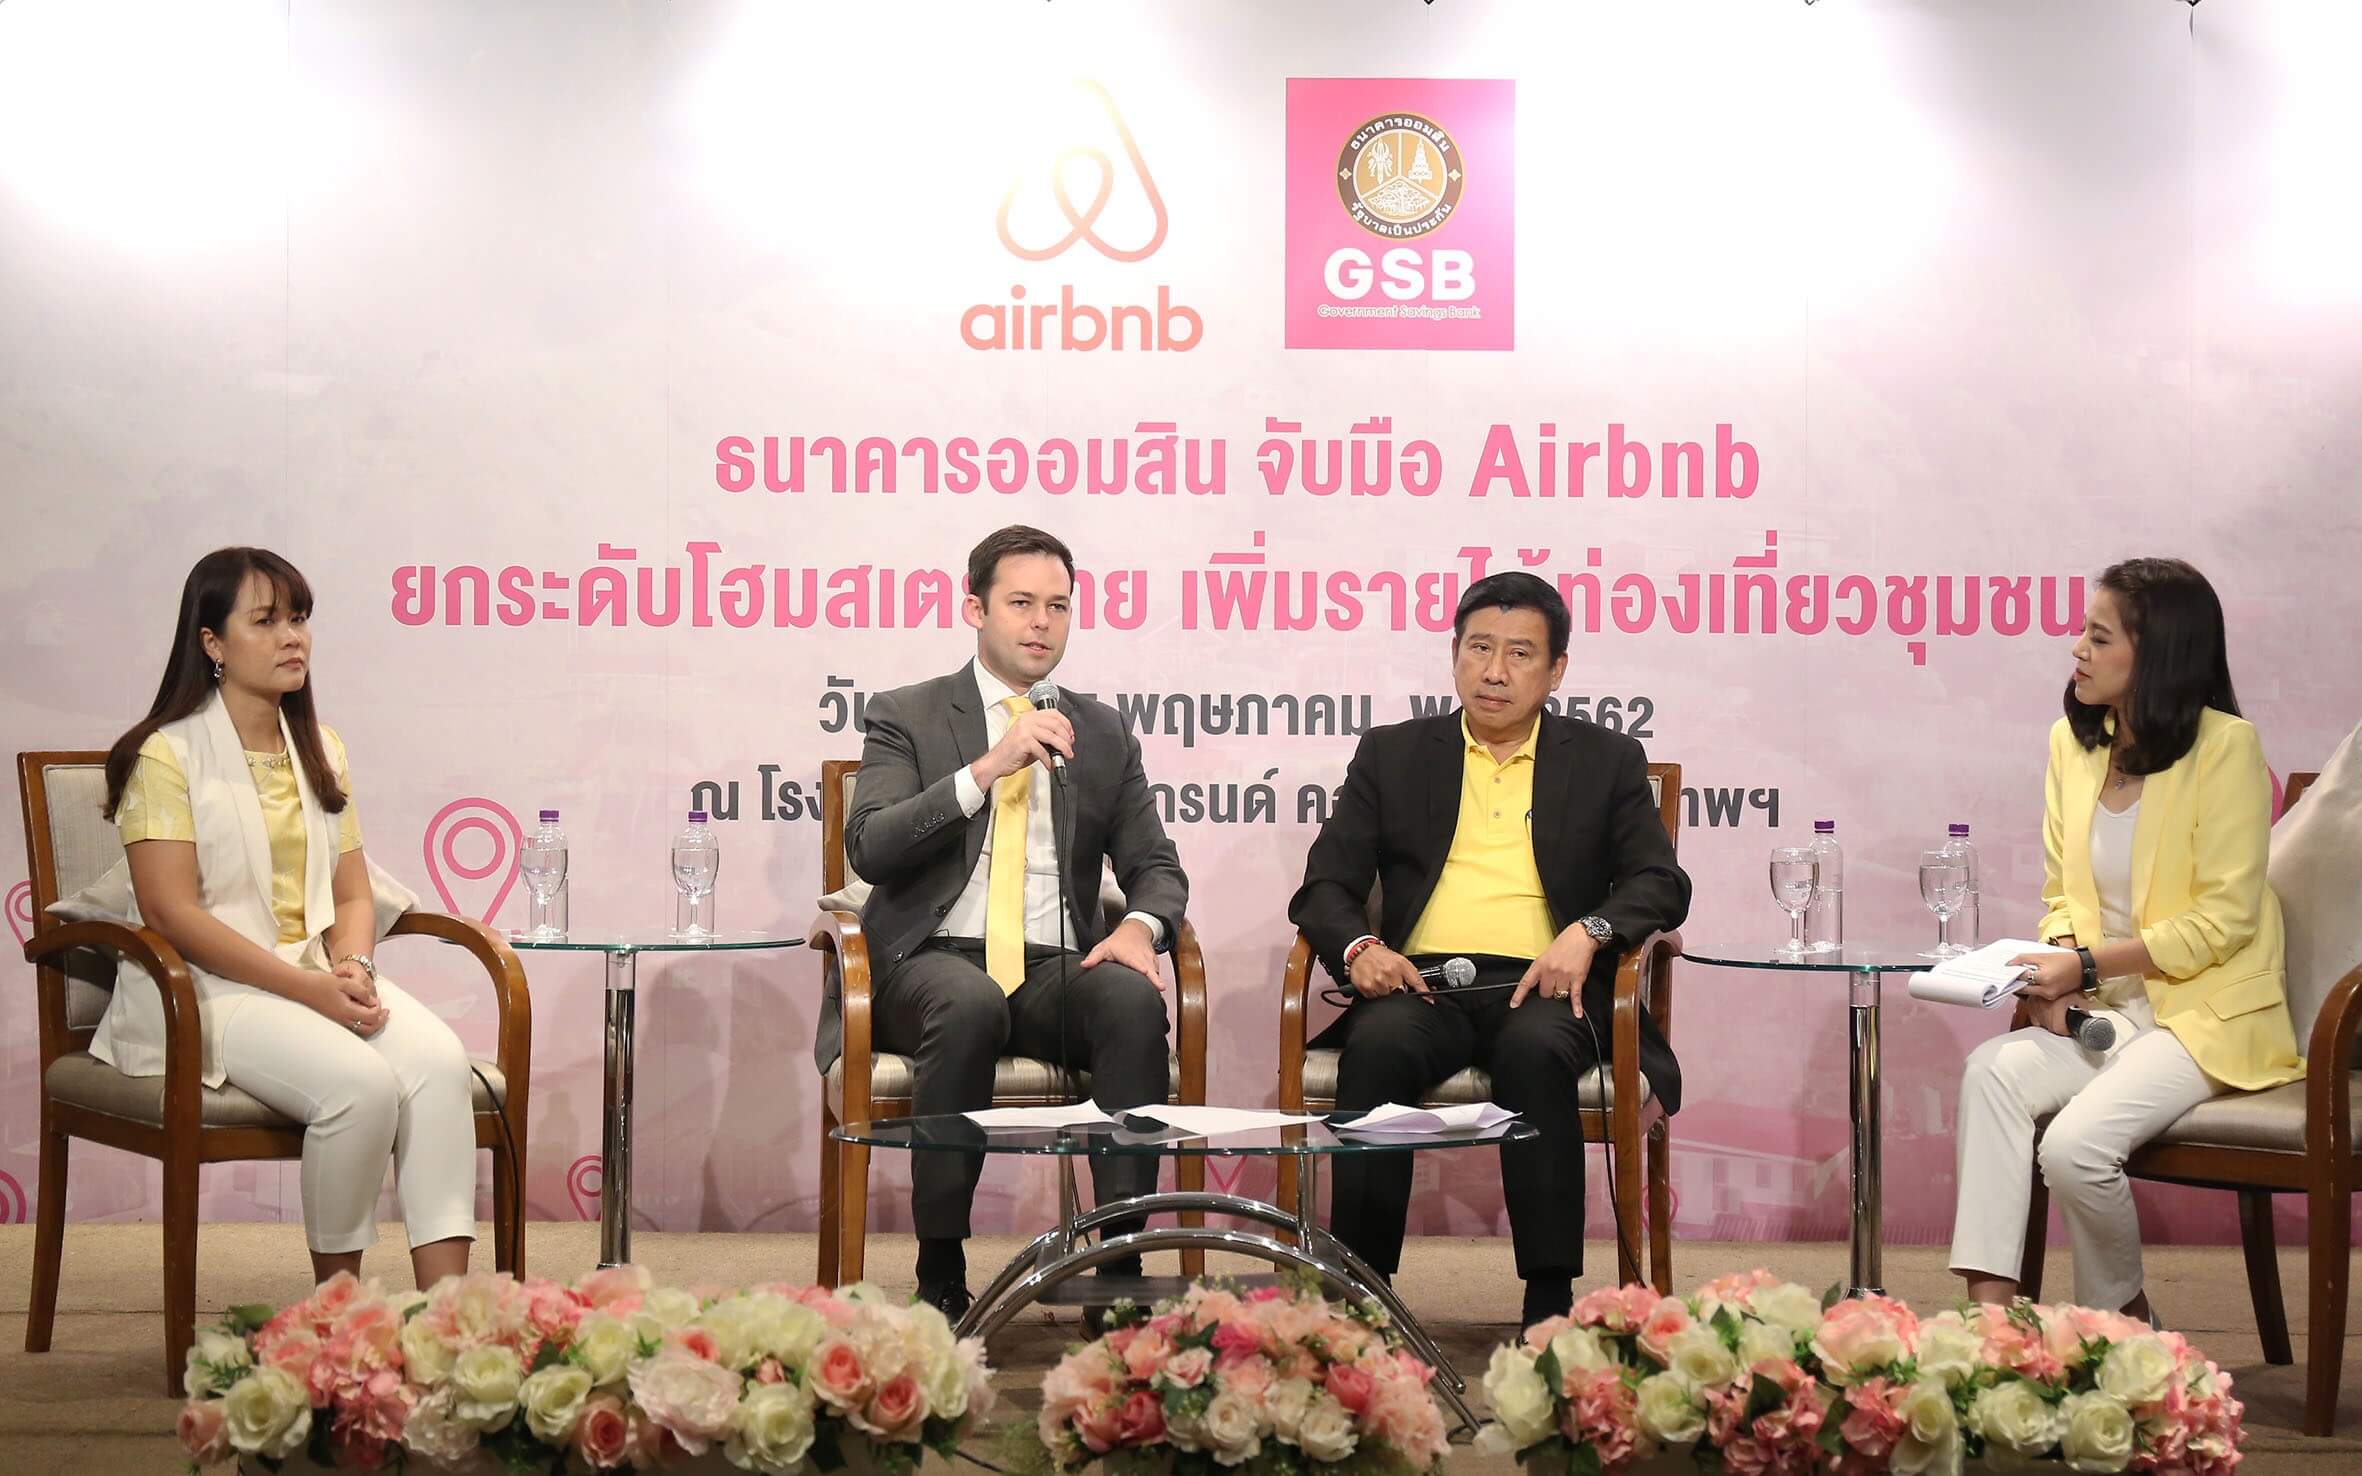 Dr.-Chatchai-Payuhanaveechai-GSB-Başkan-ve-CEO-ve-Mike-Orgill-Airbnb-Güneydoğu Asya-Hong-Kong-ve-Tayvan-Genel Müdürü-ortaklaşa-ortaklaşa-başlattı